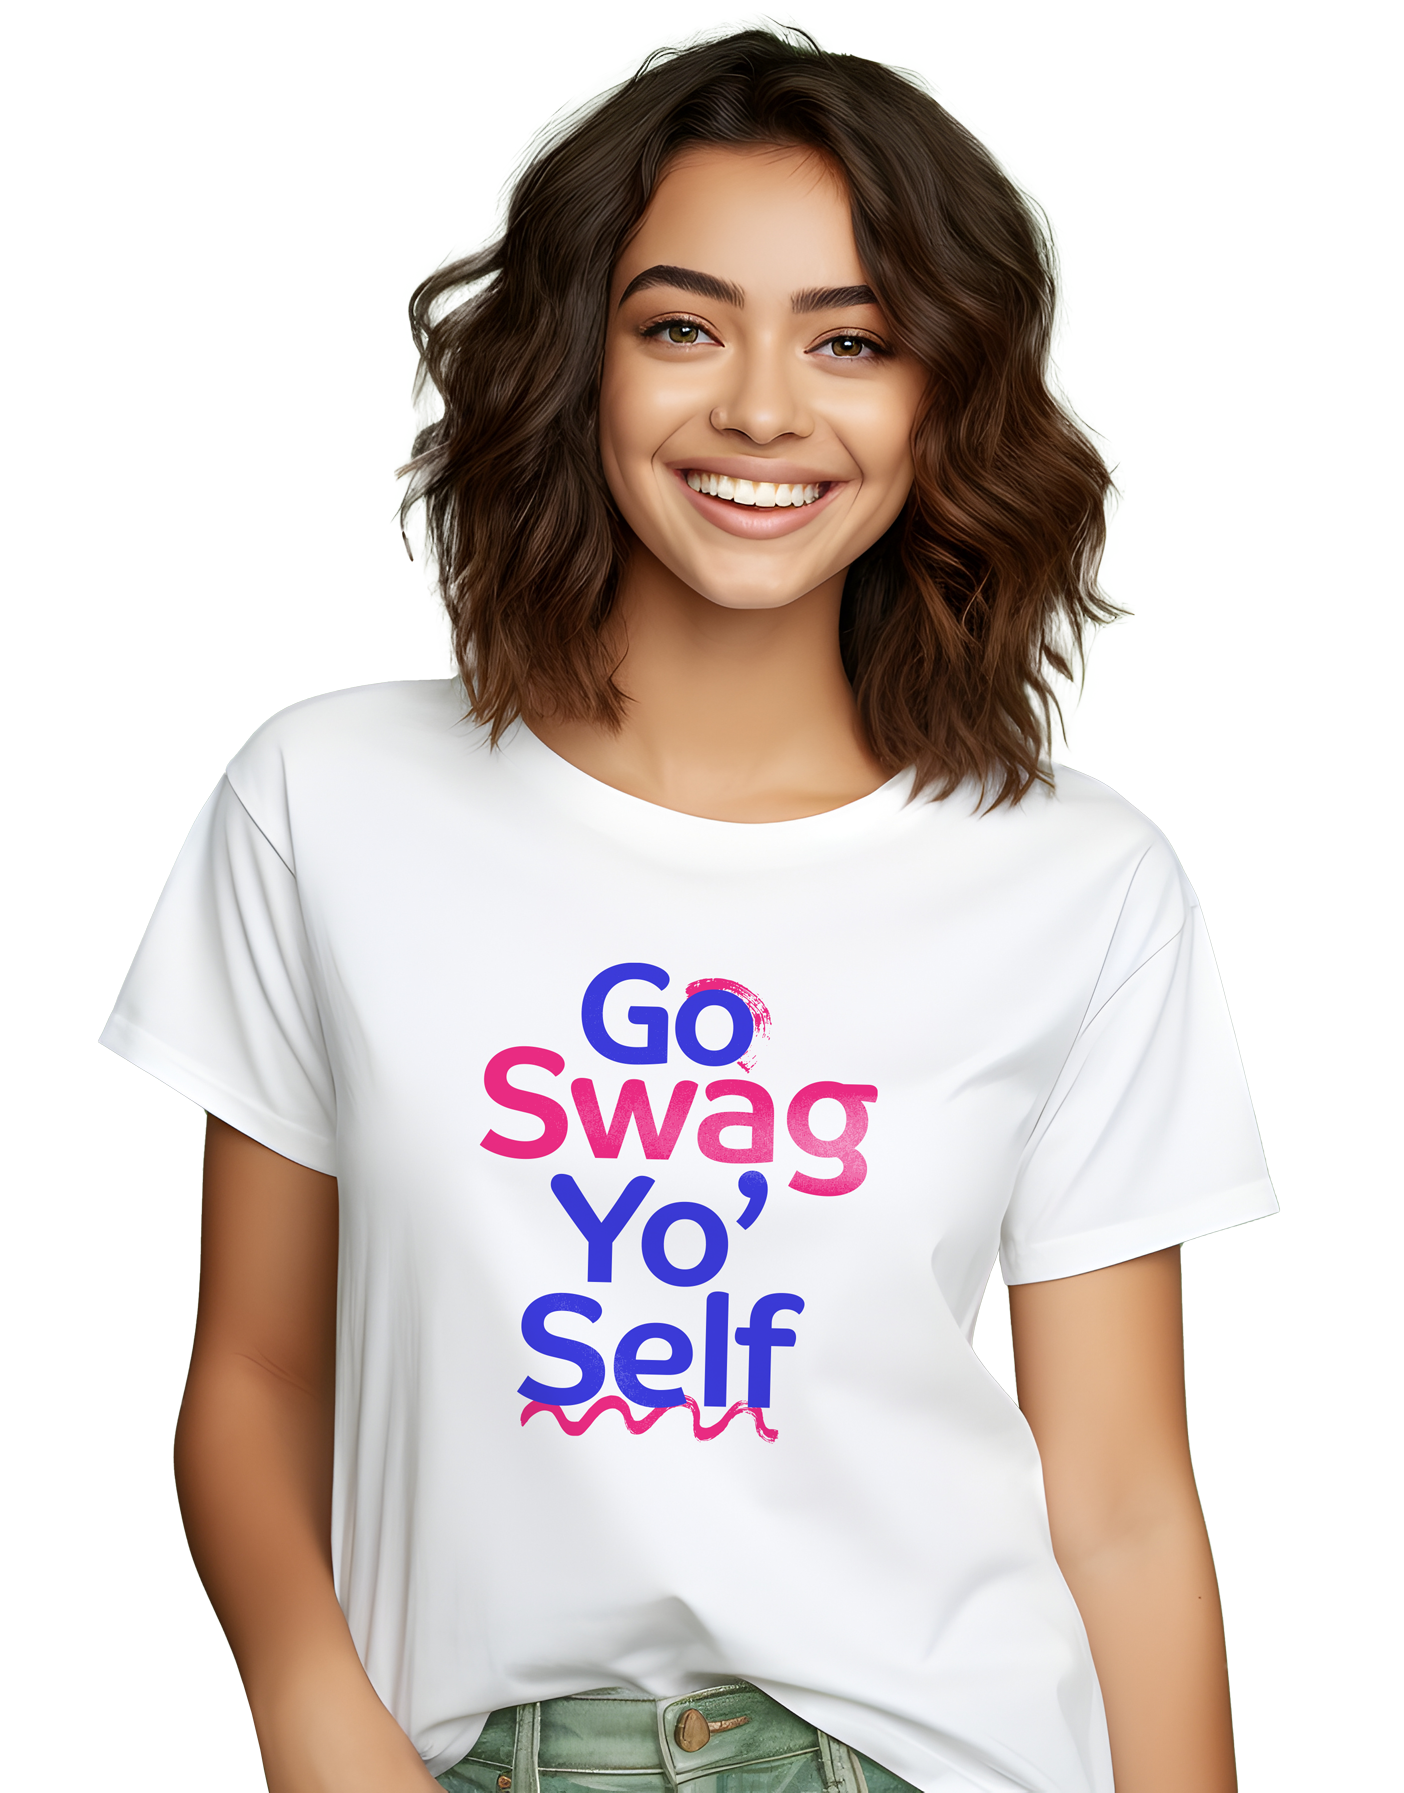 Woman wearing white t-shirt with Go Swag Yo' Self written on it